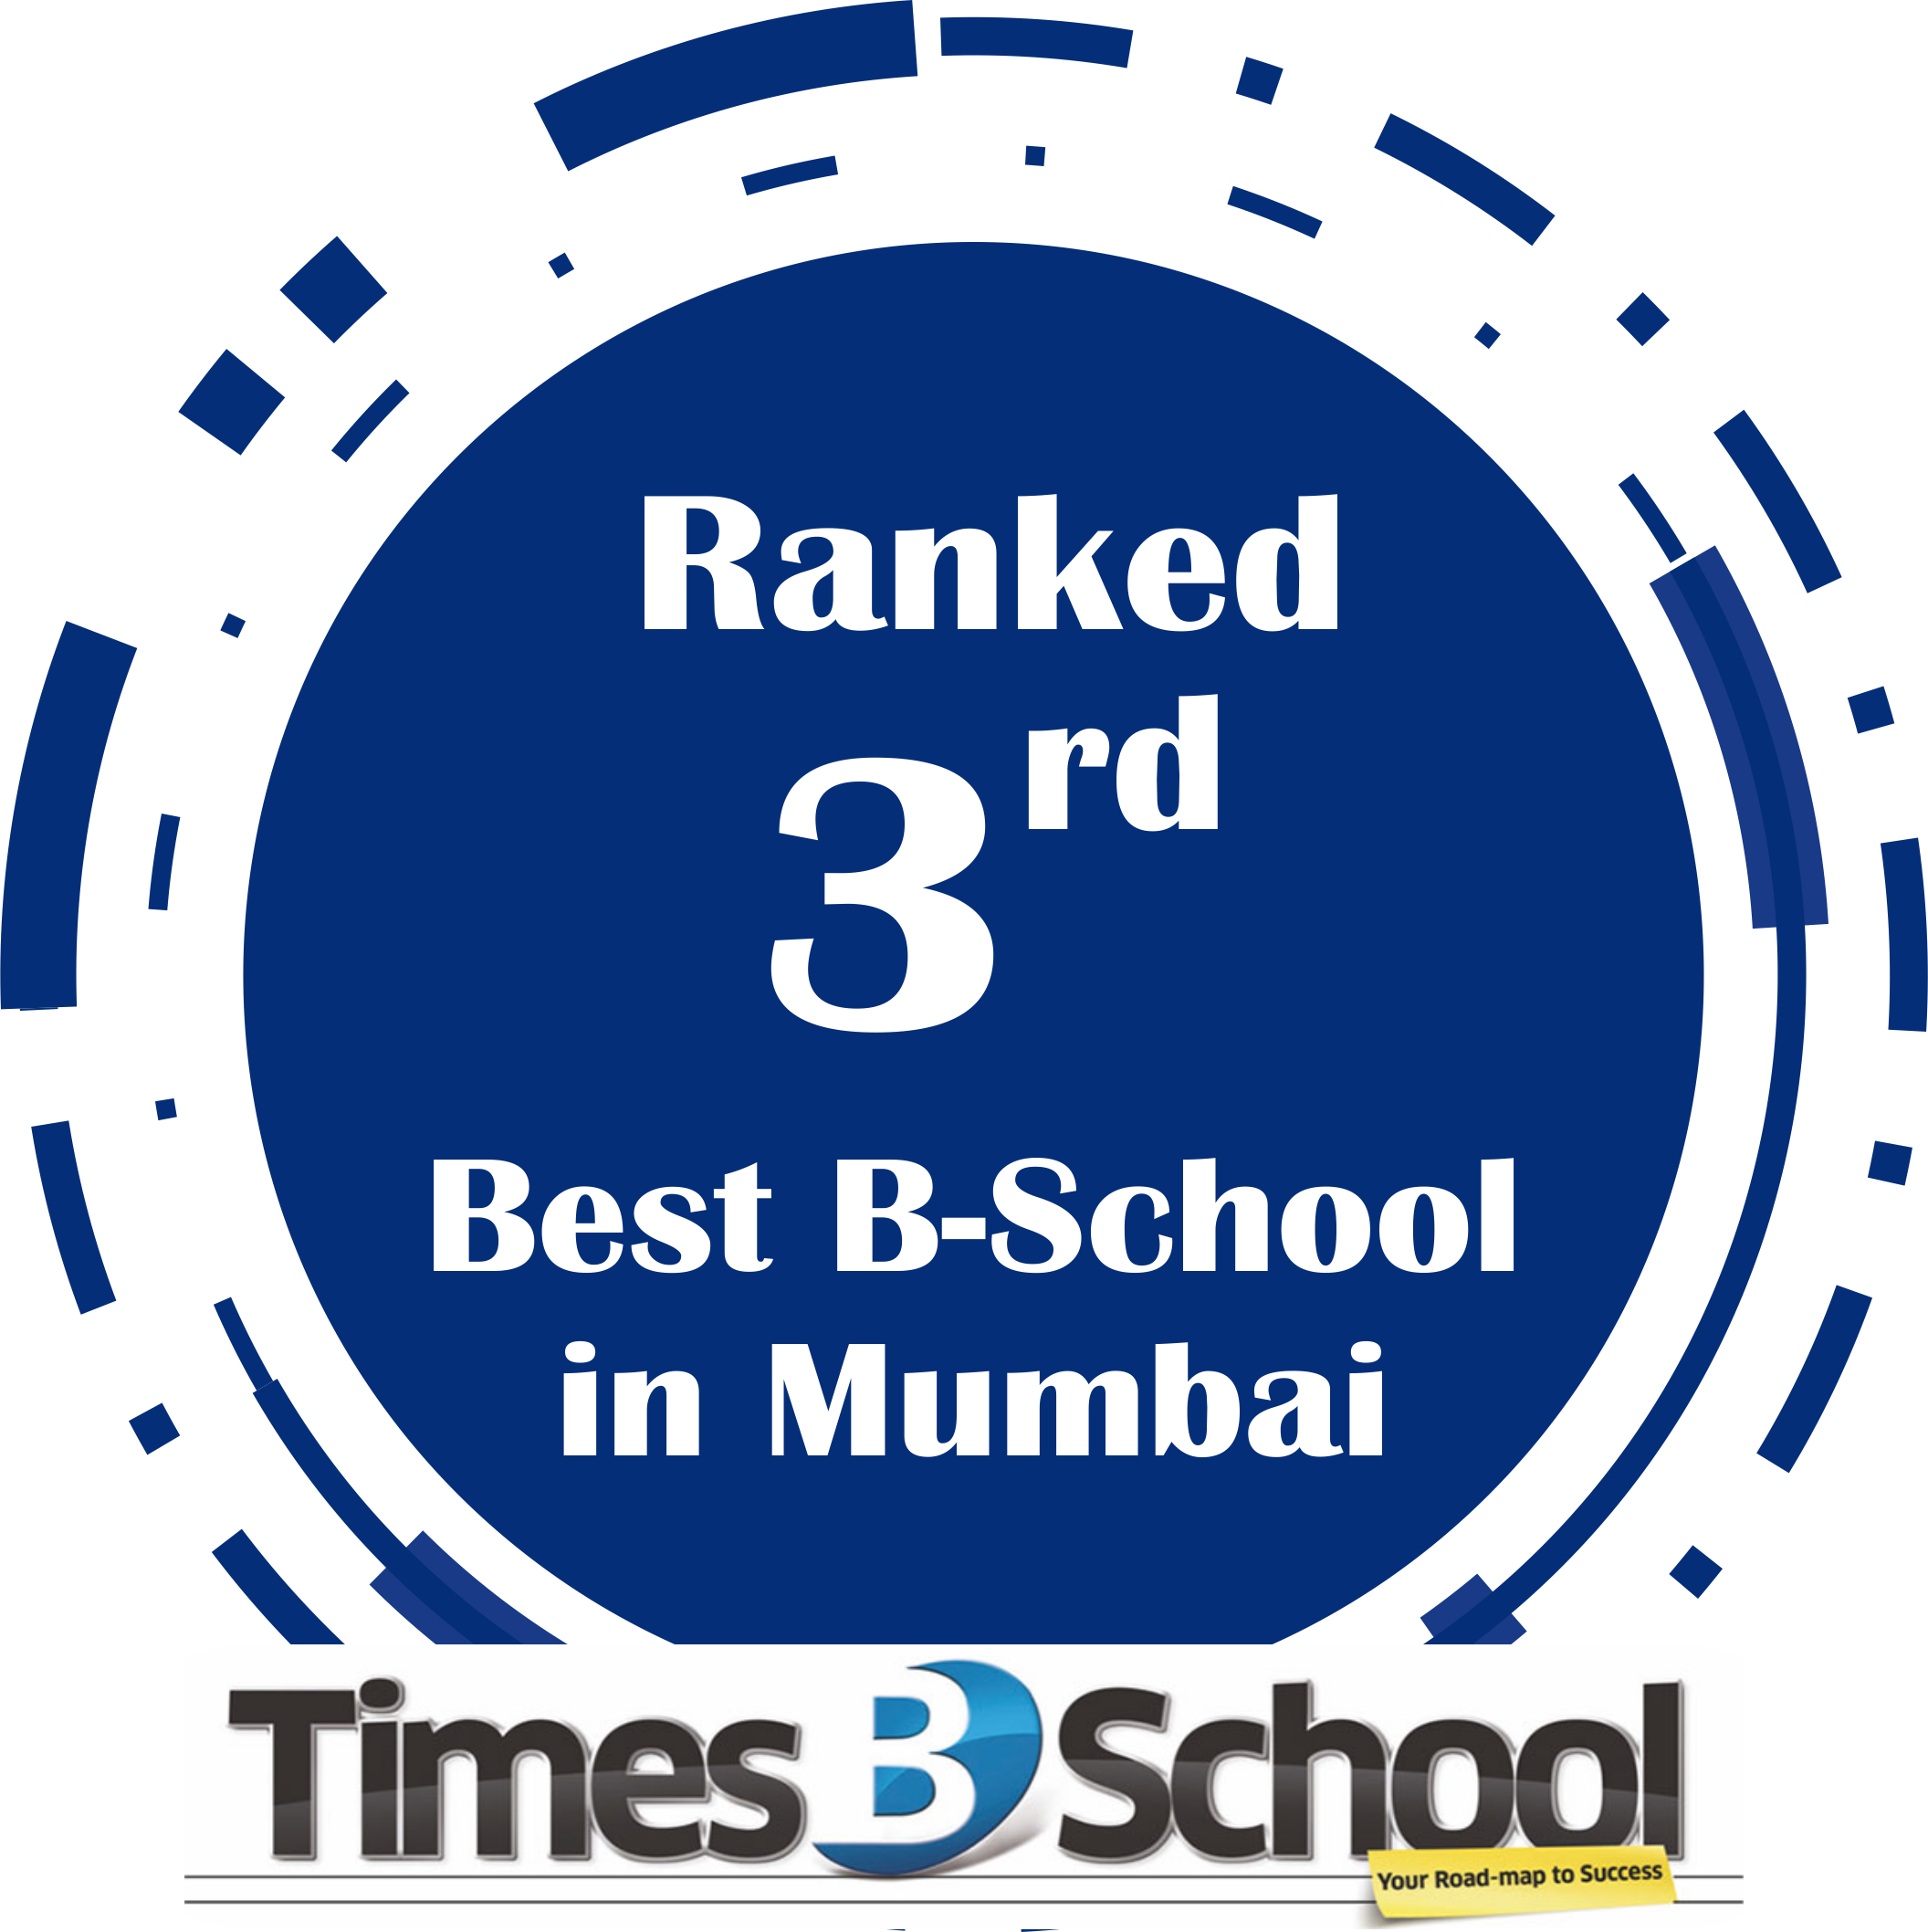 Ranked 3rd Best B-School Mumbai Times B School